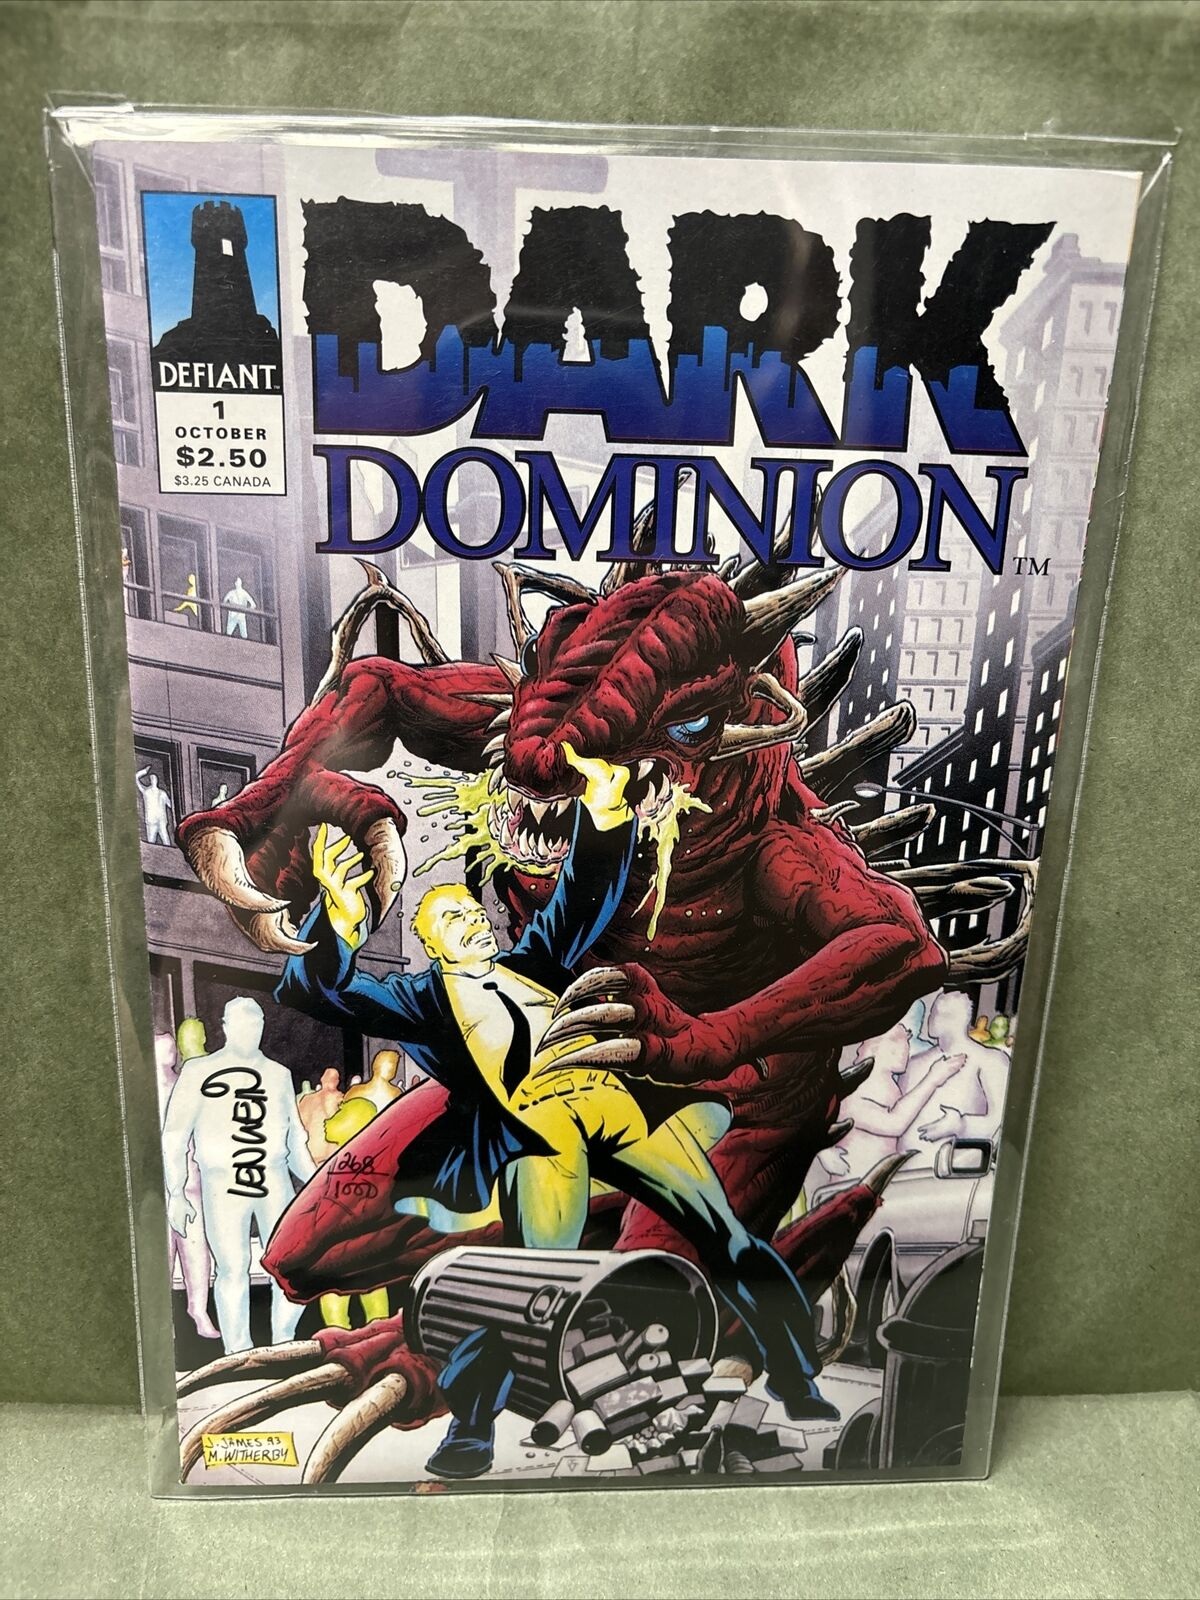 1993 Defiant Comics Dark Dominion Volume #1 Signed With COA